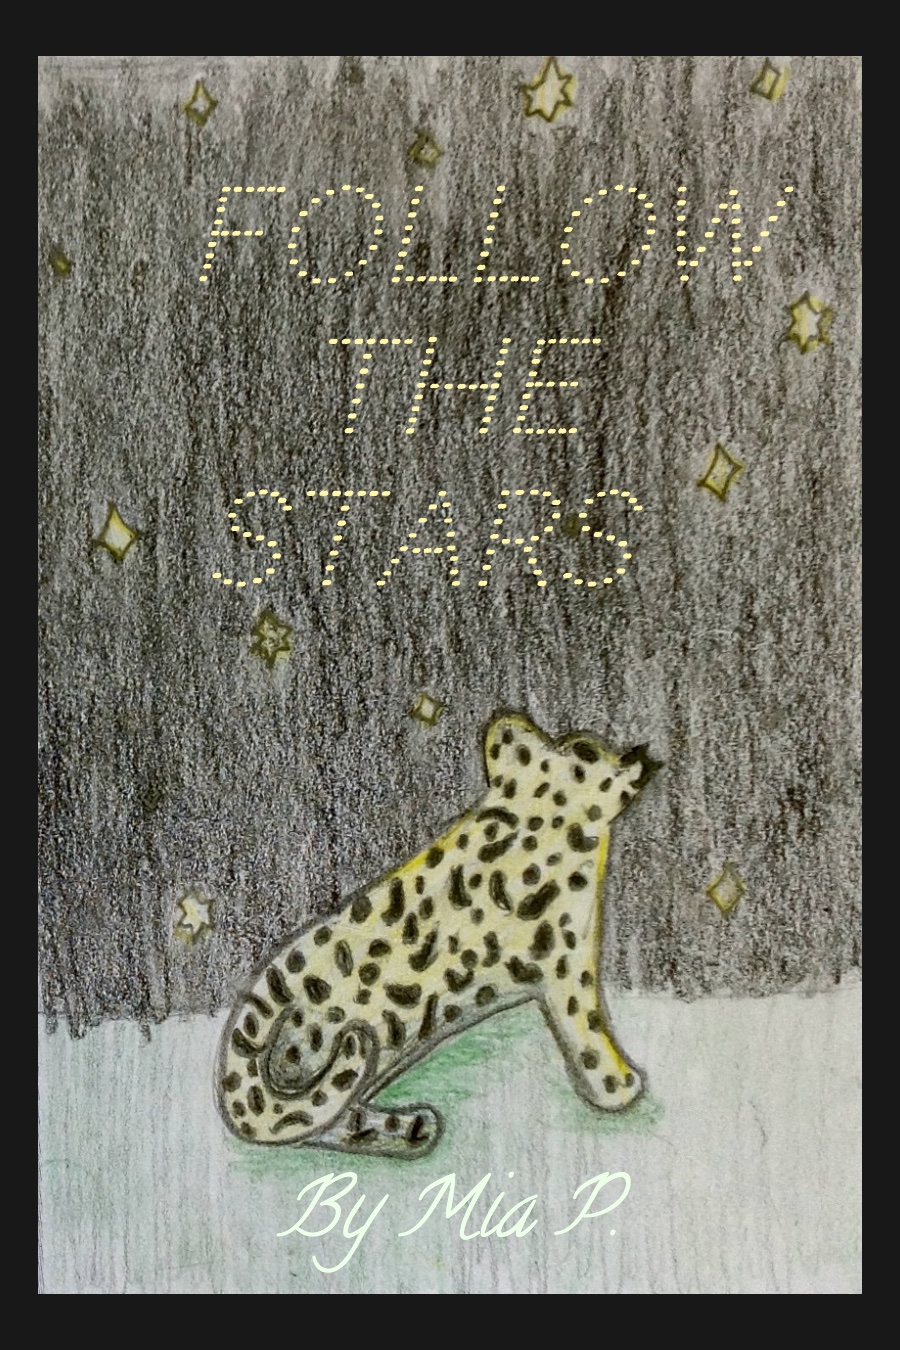 Follow The Stars by Mia P